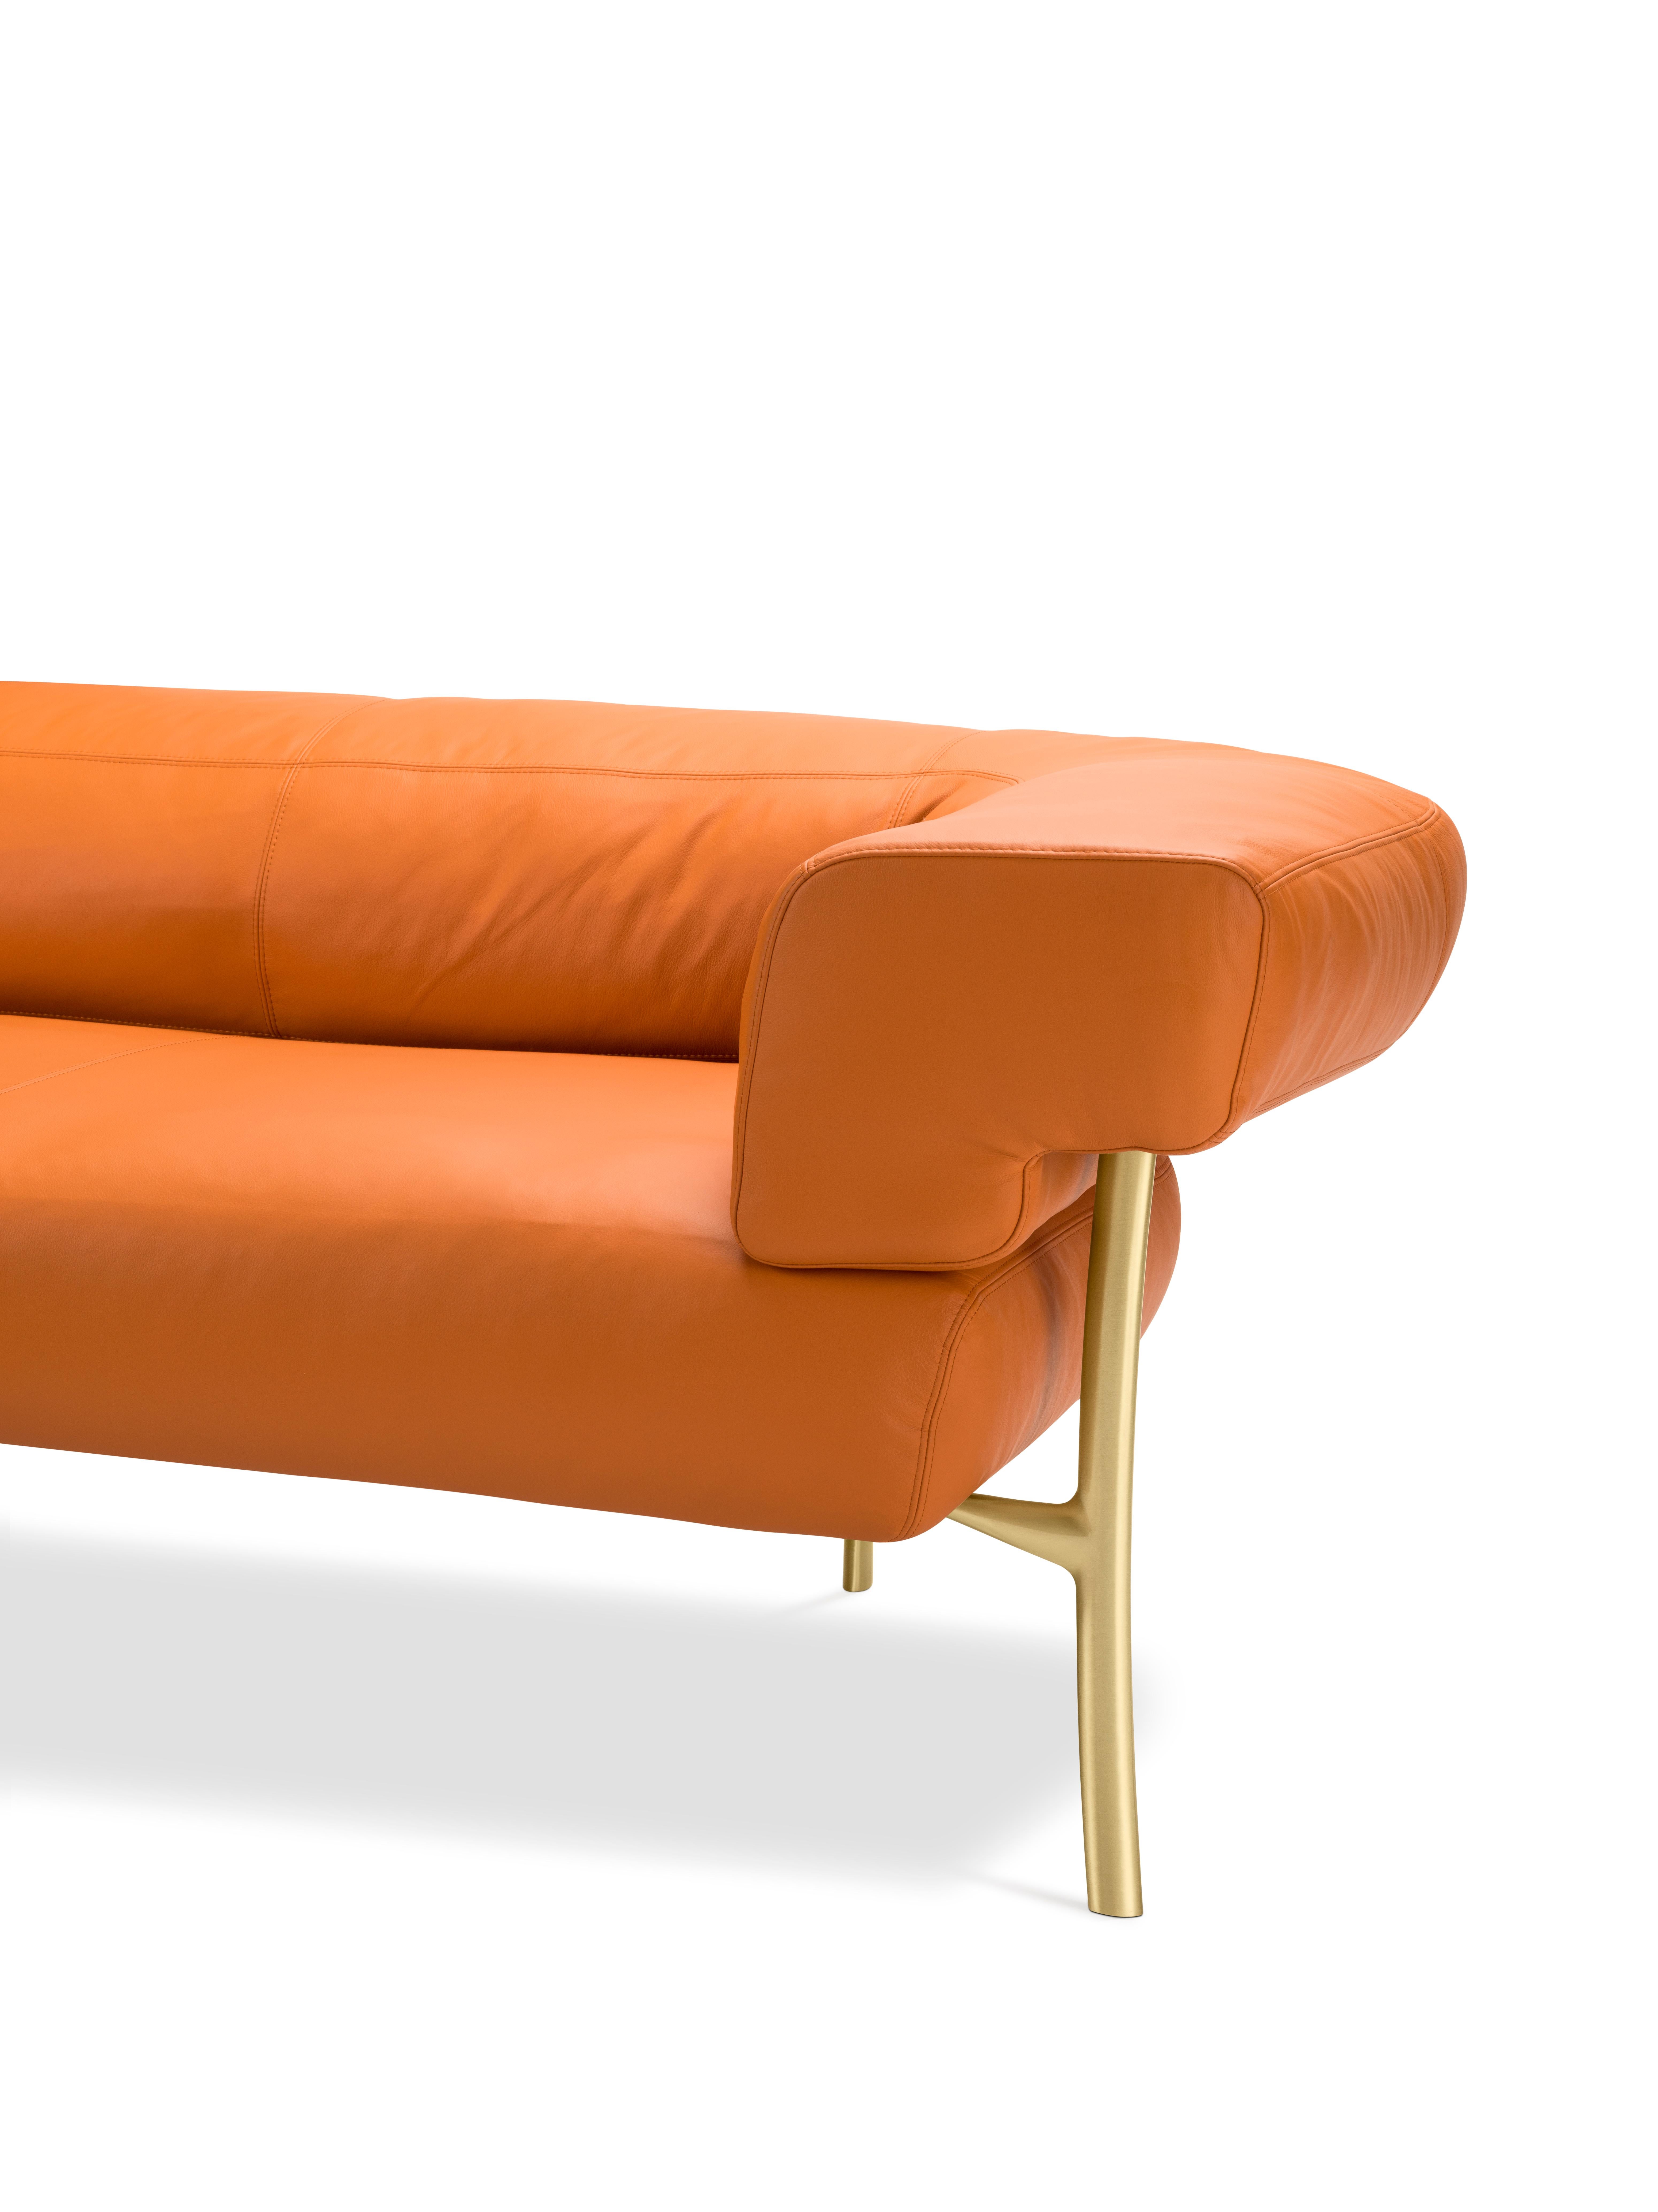 Italian Katana 4 Seater Sofa in Arancio Natural Leather with Satin Brass Legs For Sale